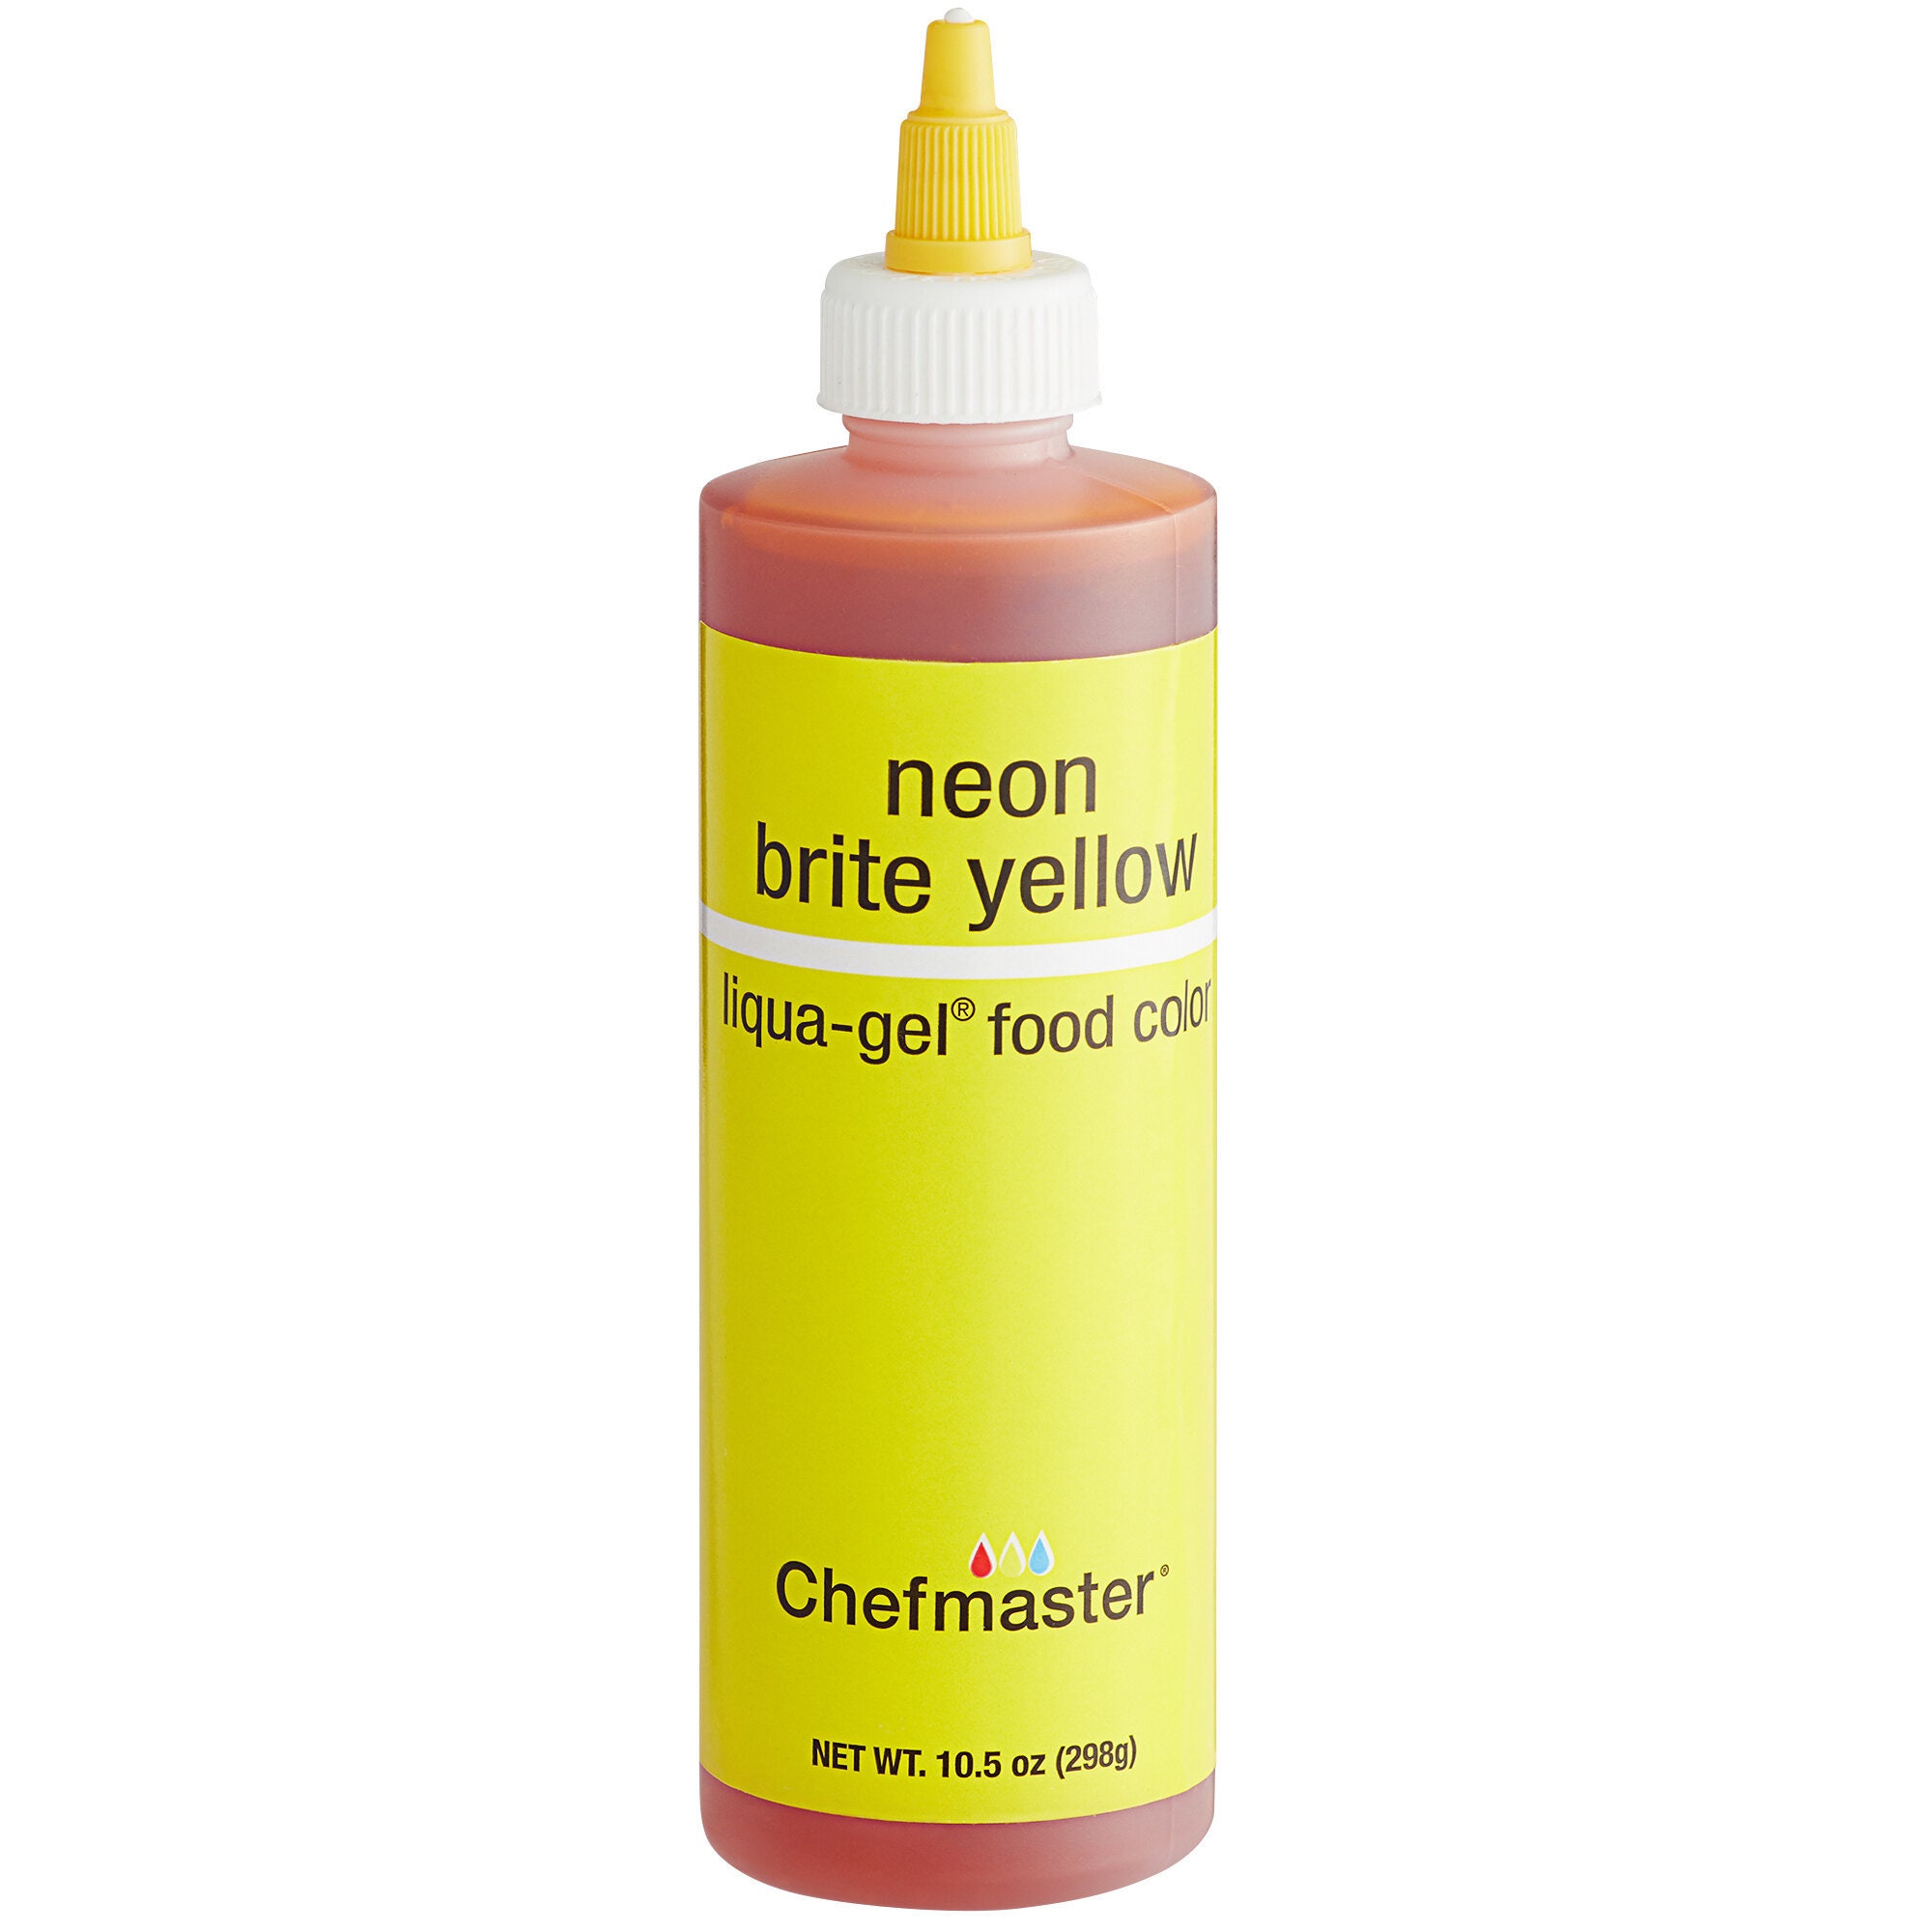 Chefmaster Neon Brite Yellow Liqua-gel Food Coloring 10.5 Oz. 